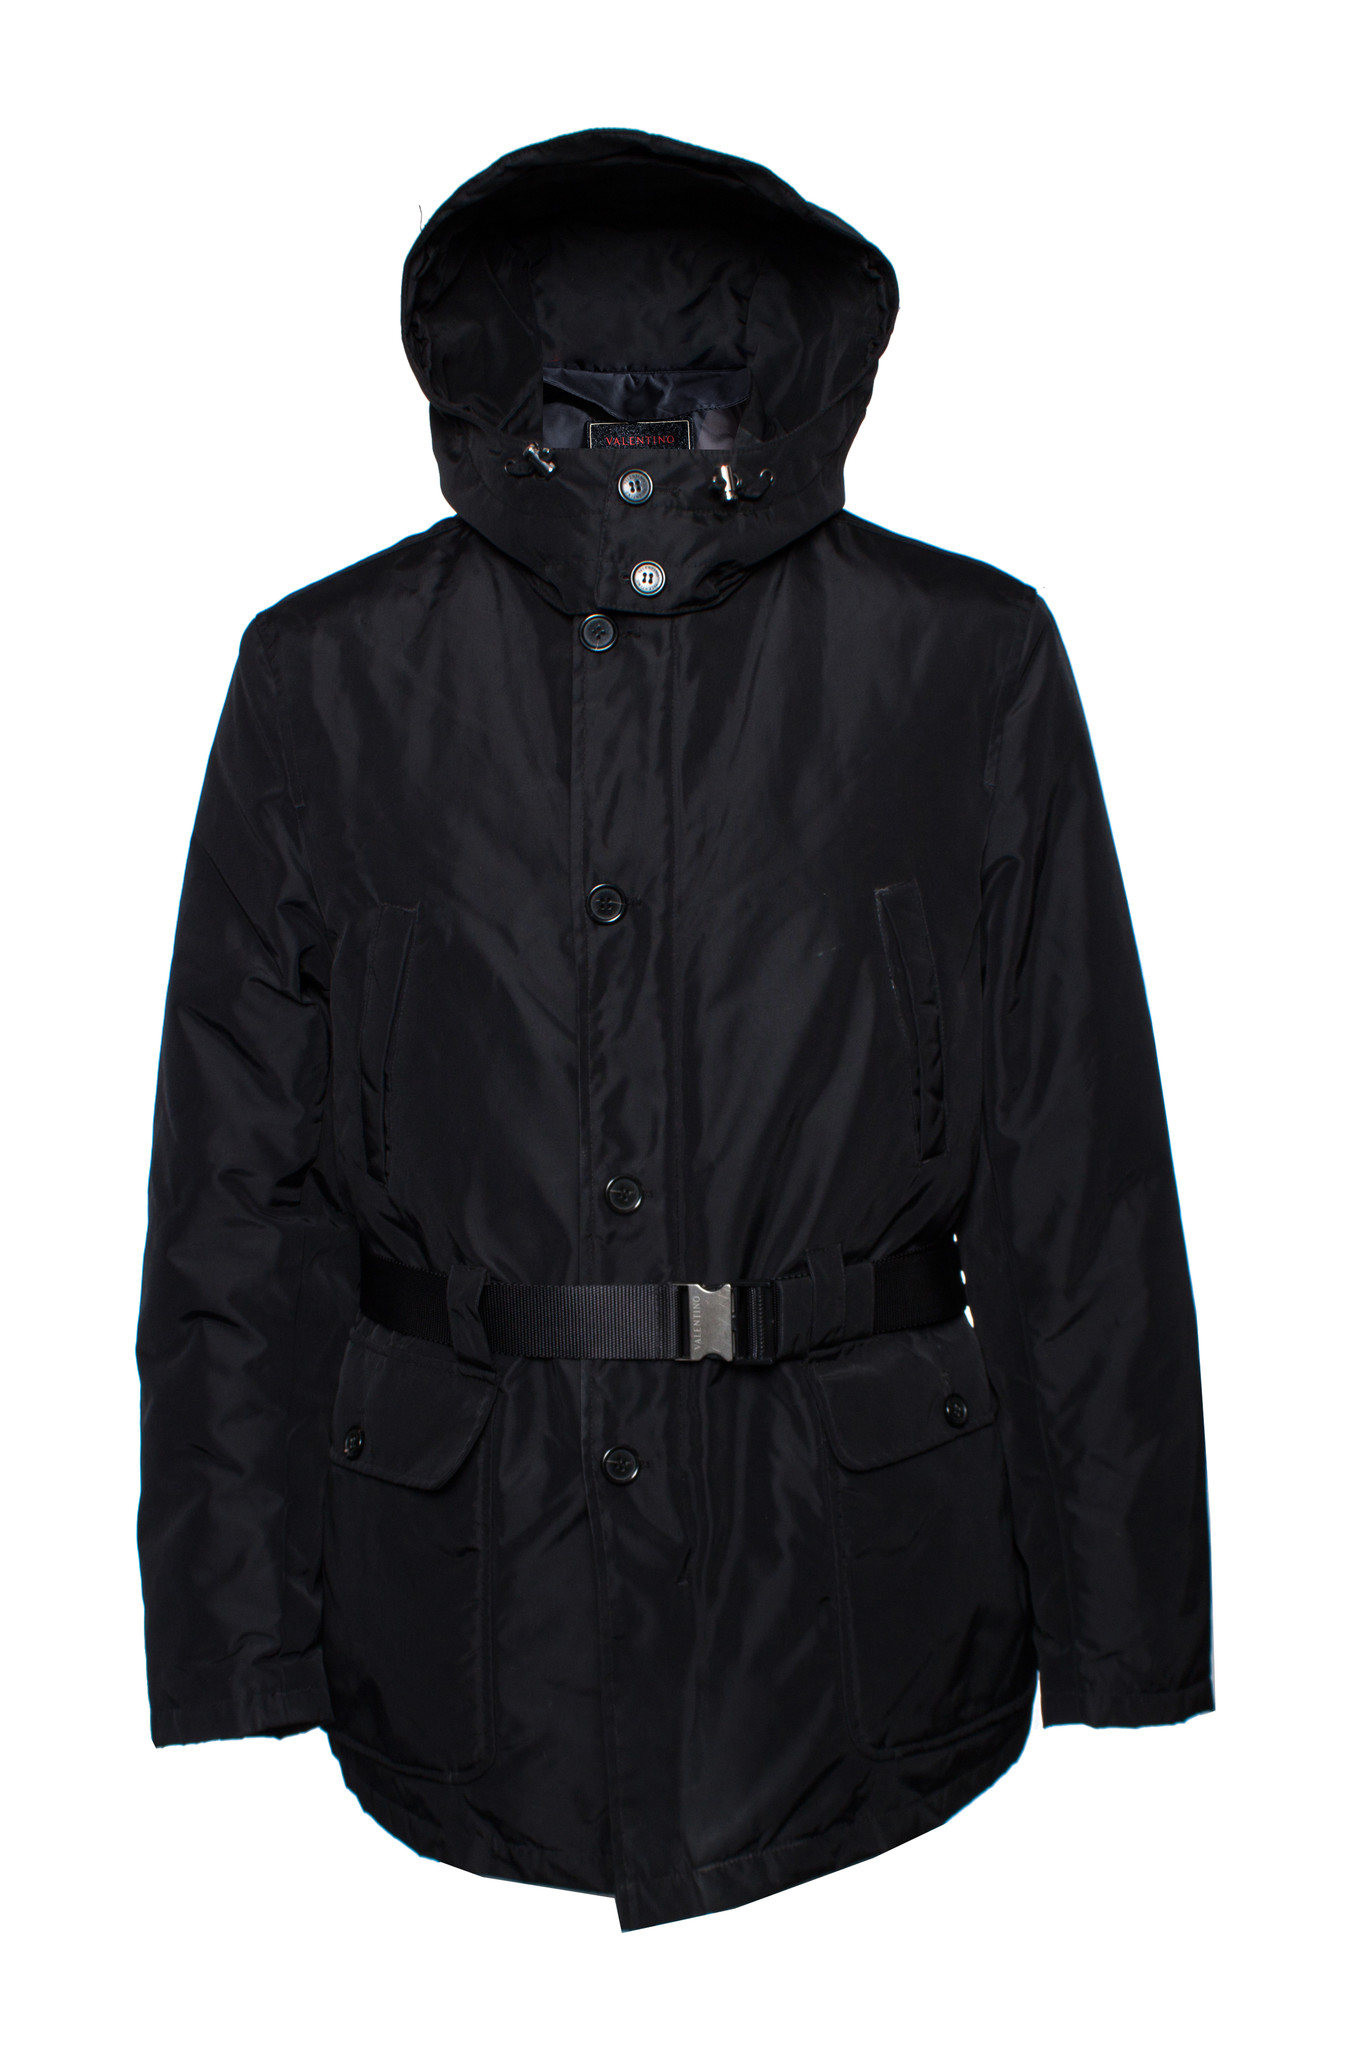 Valentino, black parka jacket with removable hood. - Unique Designer Pieces